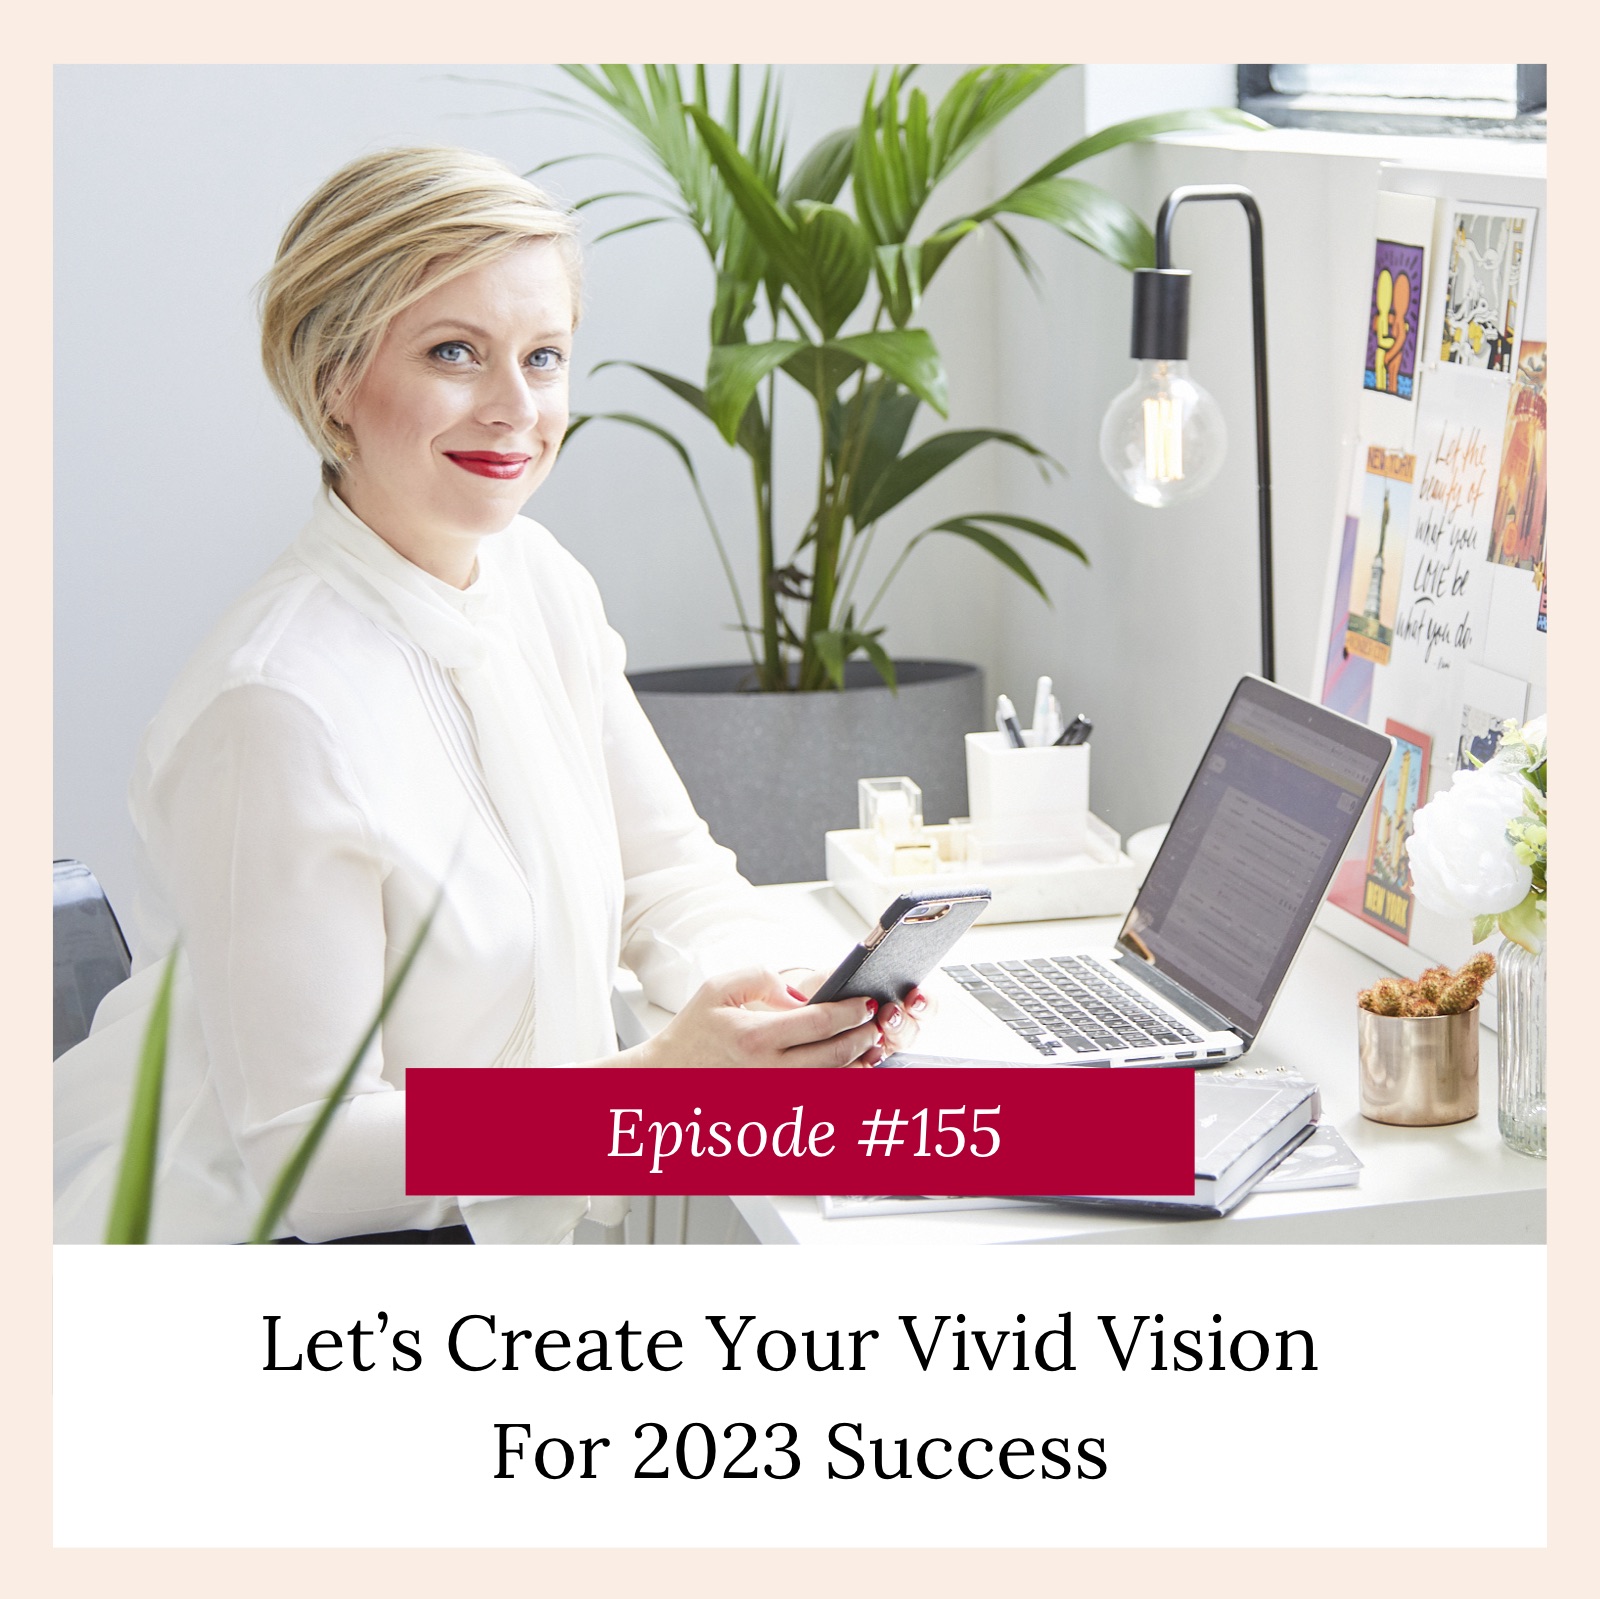 Create a vivid vision for 2023